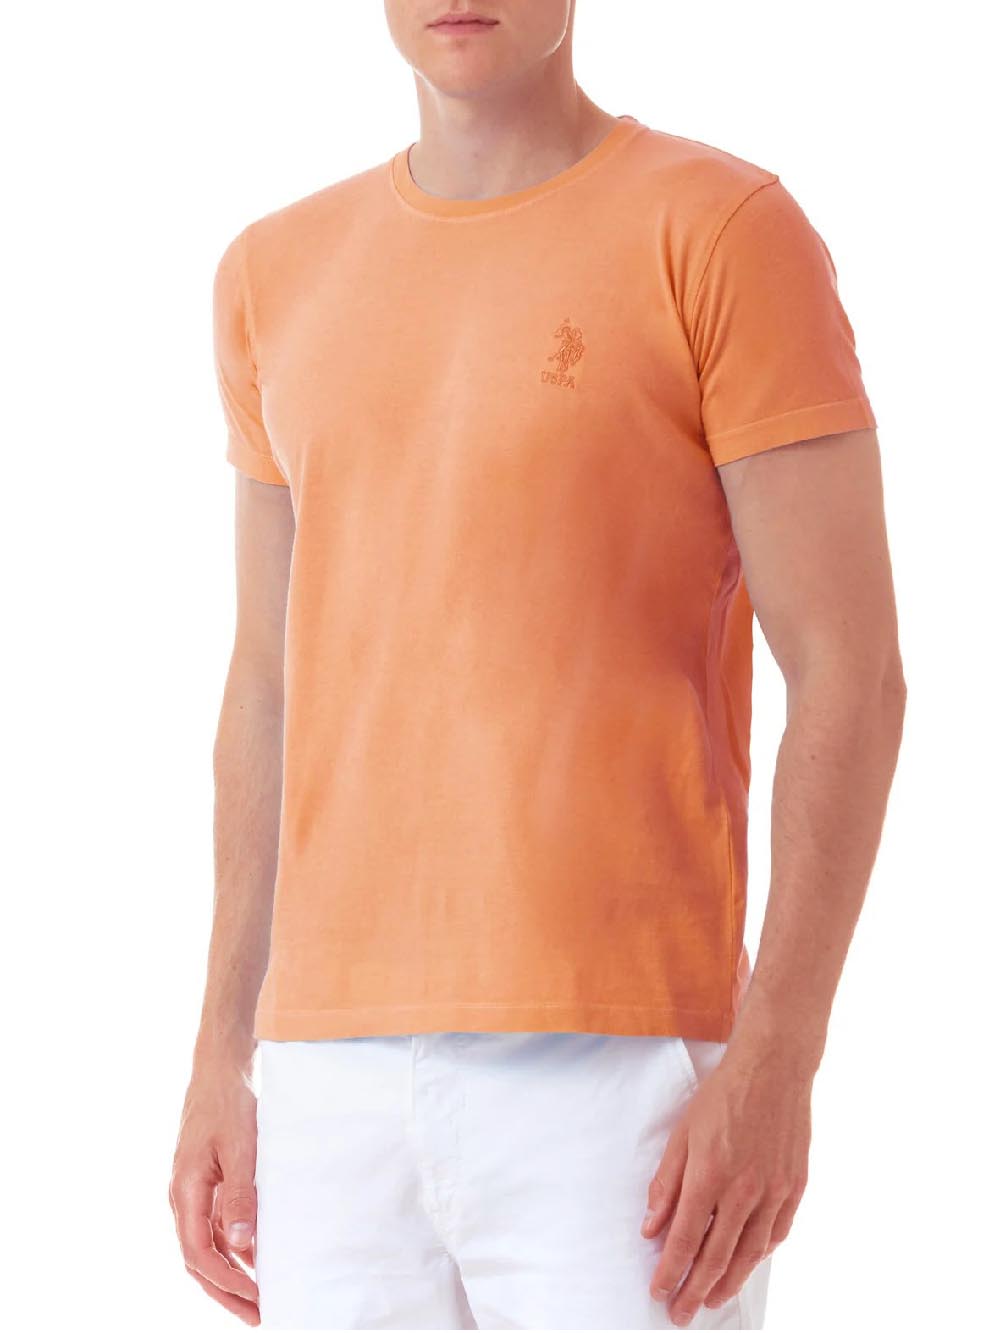 U.S. Polo Assn. T-shirt Uomo Arancione fluo